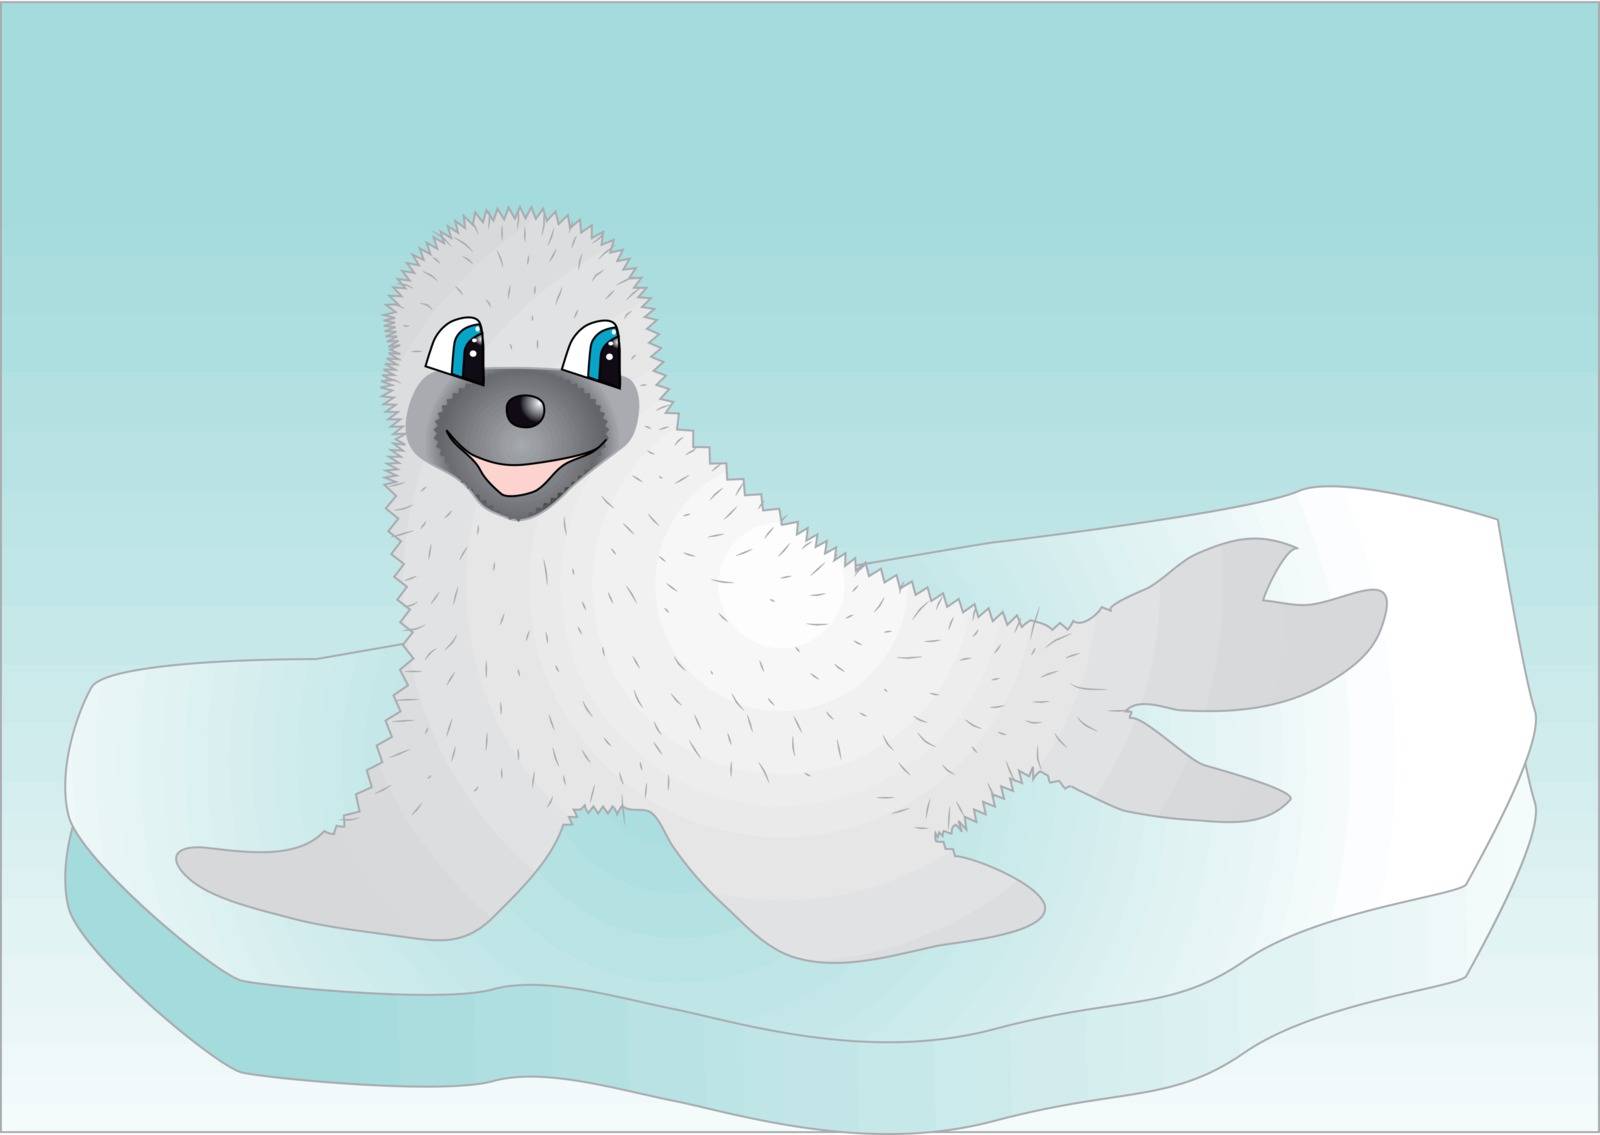 Seal on ice. Vector illustration of a cartoon seal sitting on an iceberg